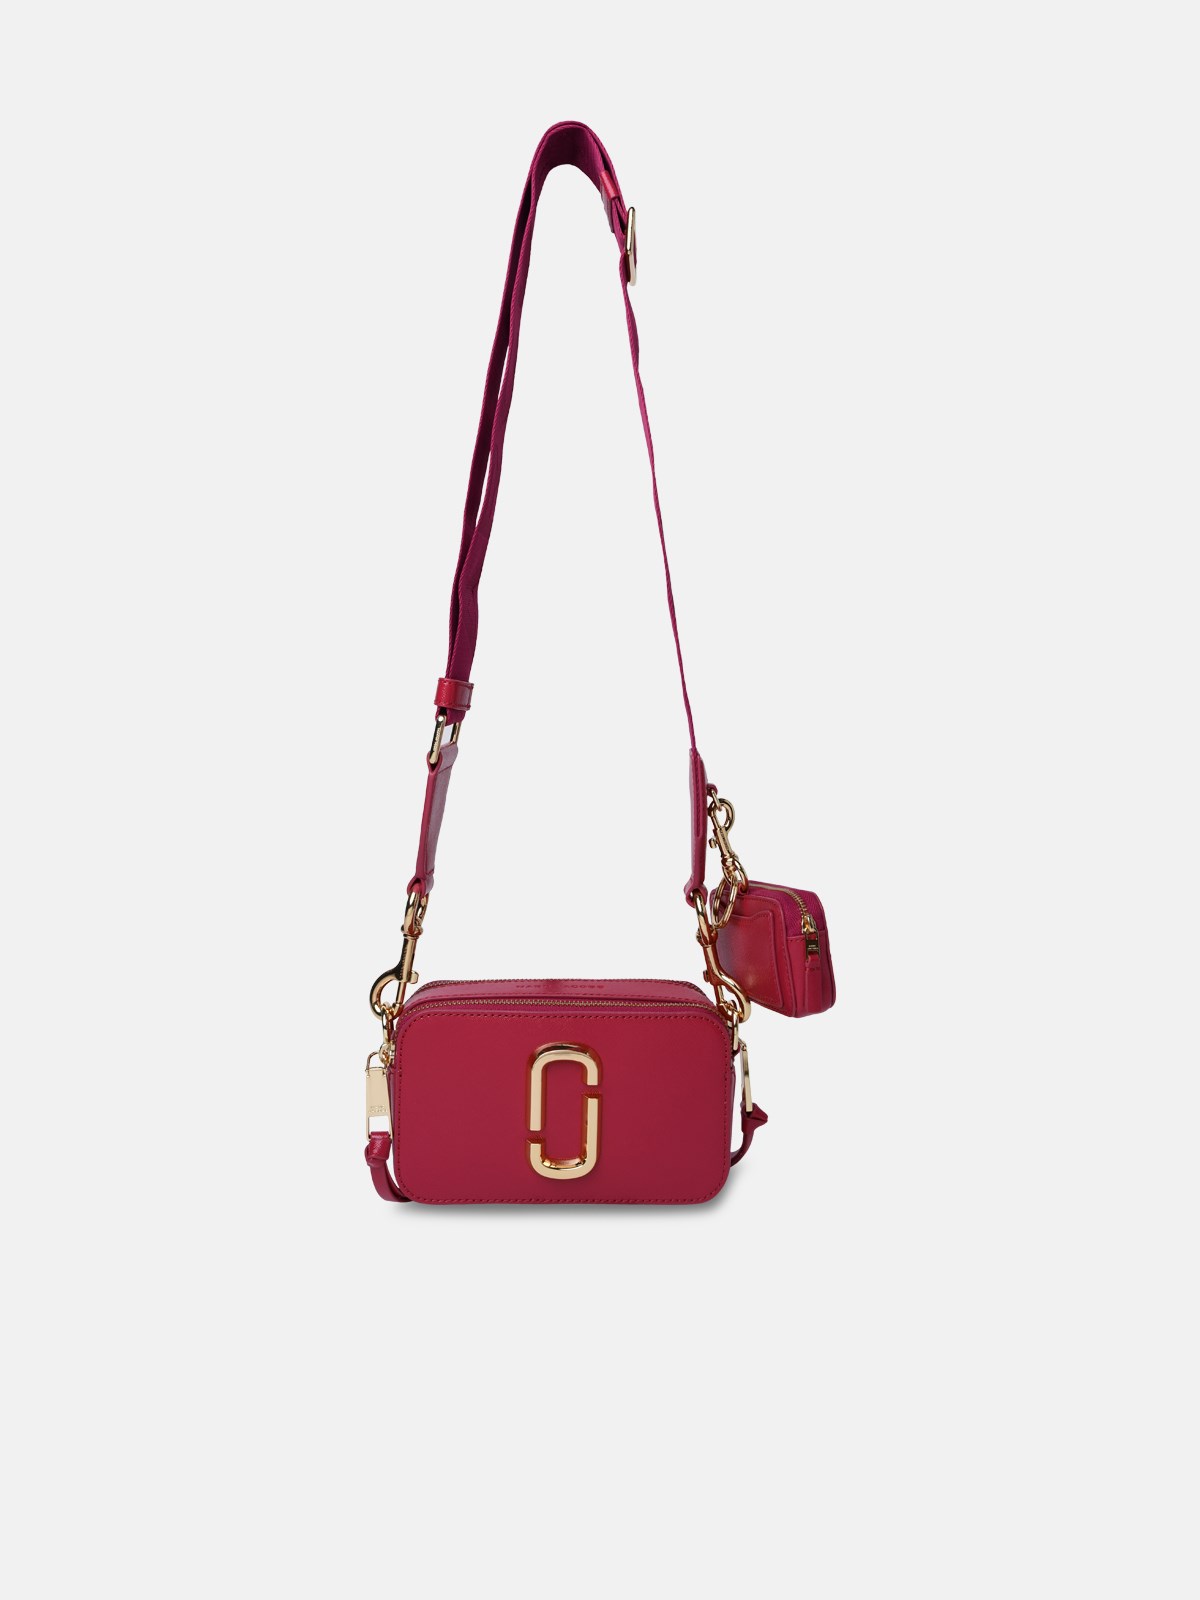 Marc Jacobs (the) 'utility Snapshot' Fuchsia Saffiano Leather Bag